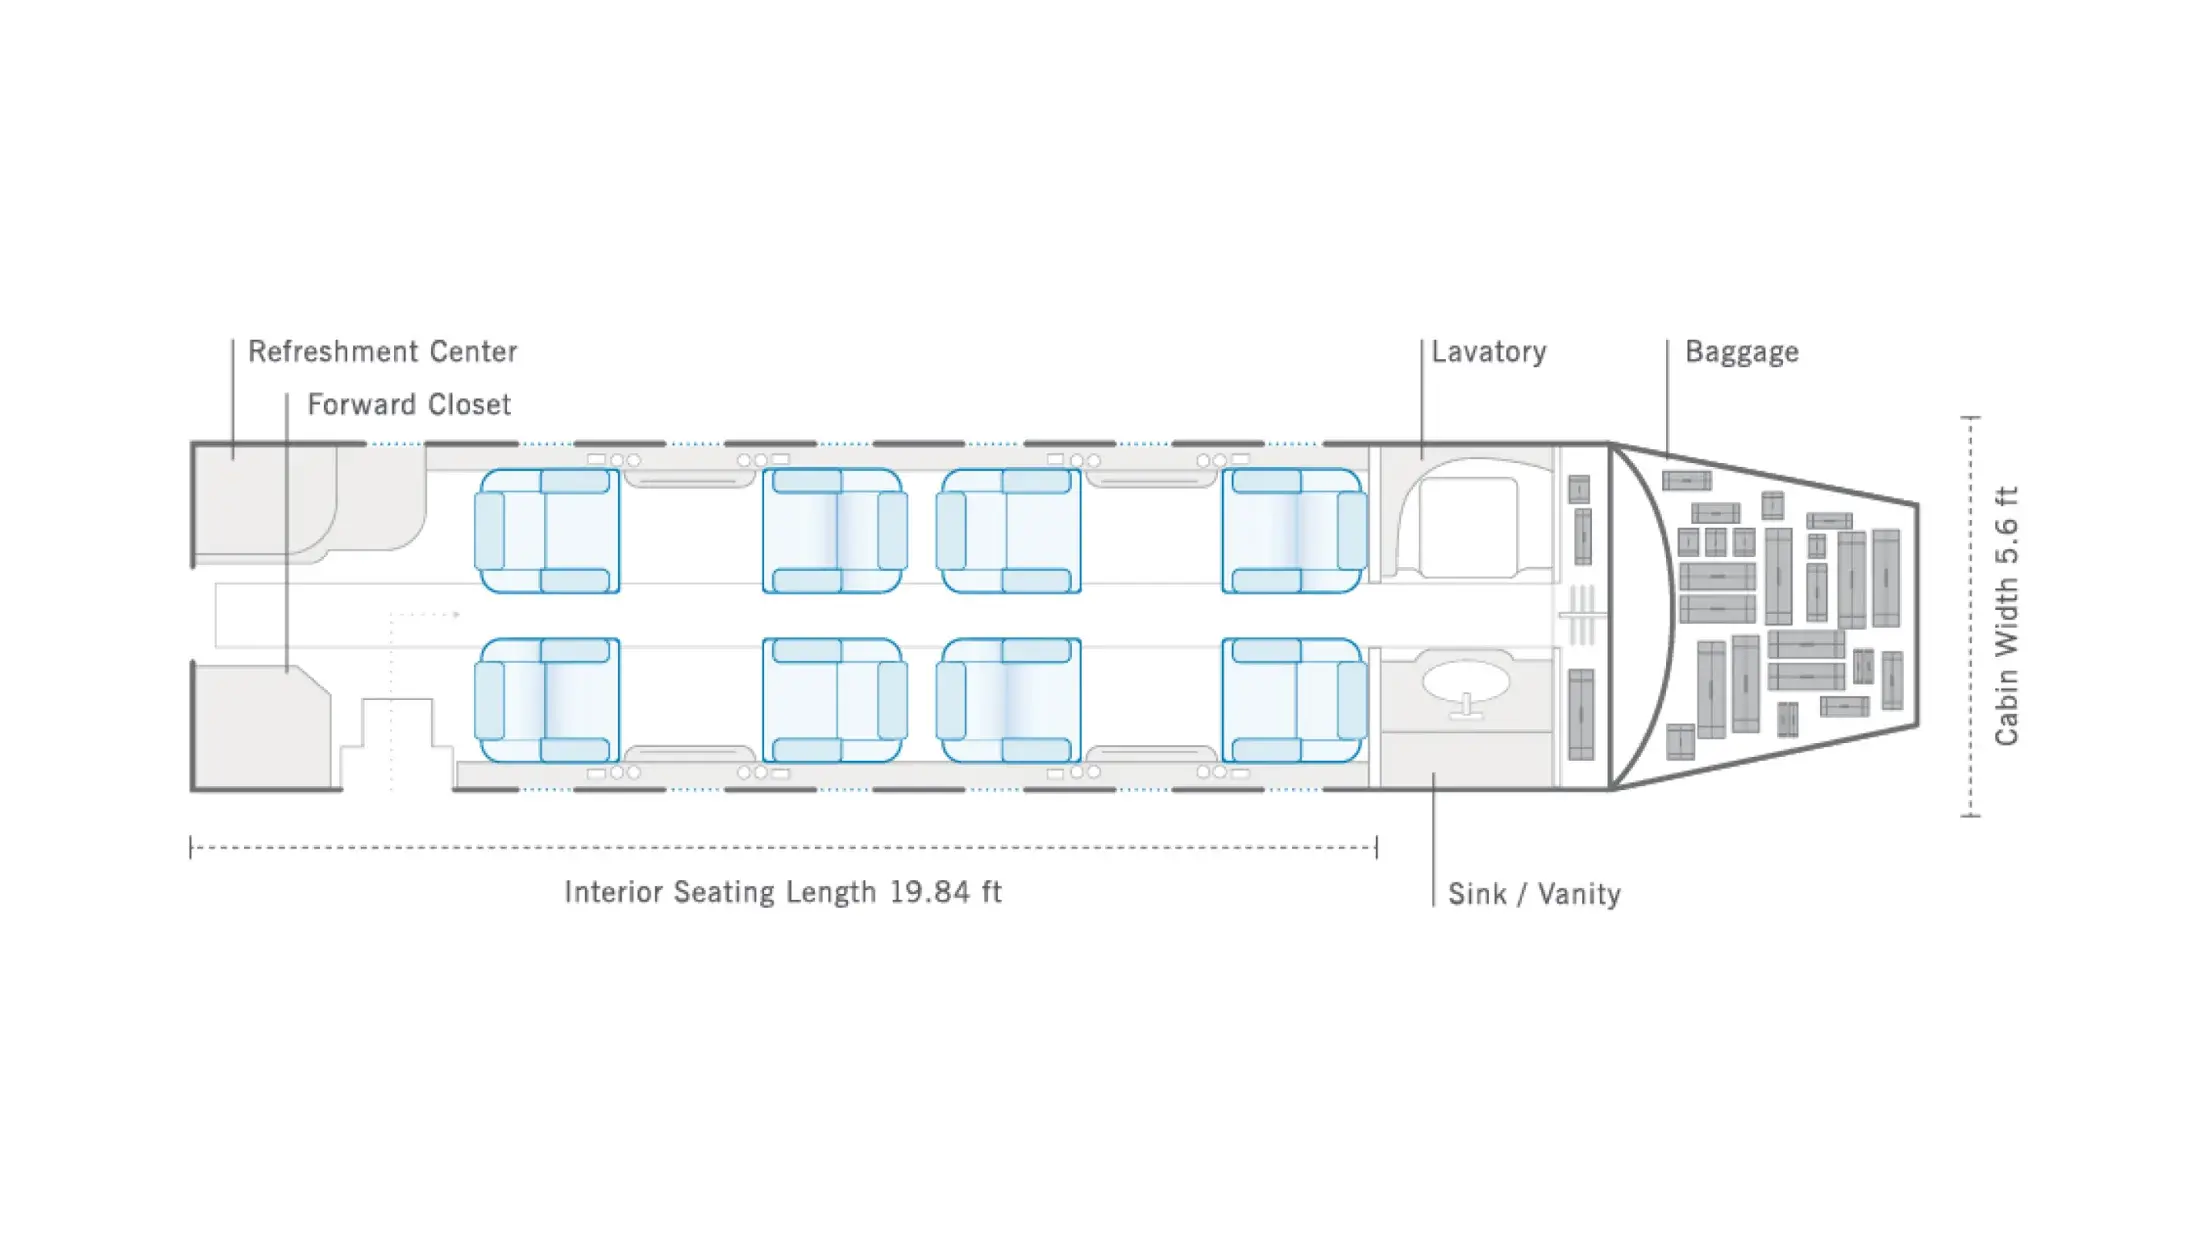 New illustration style of aircraft floorplans